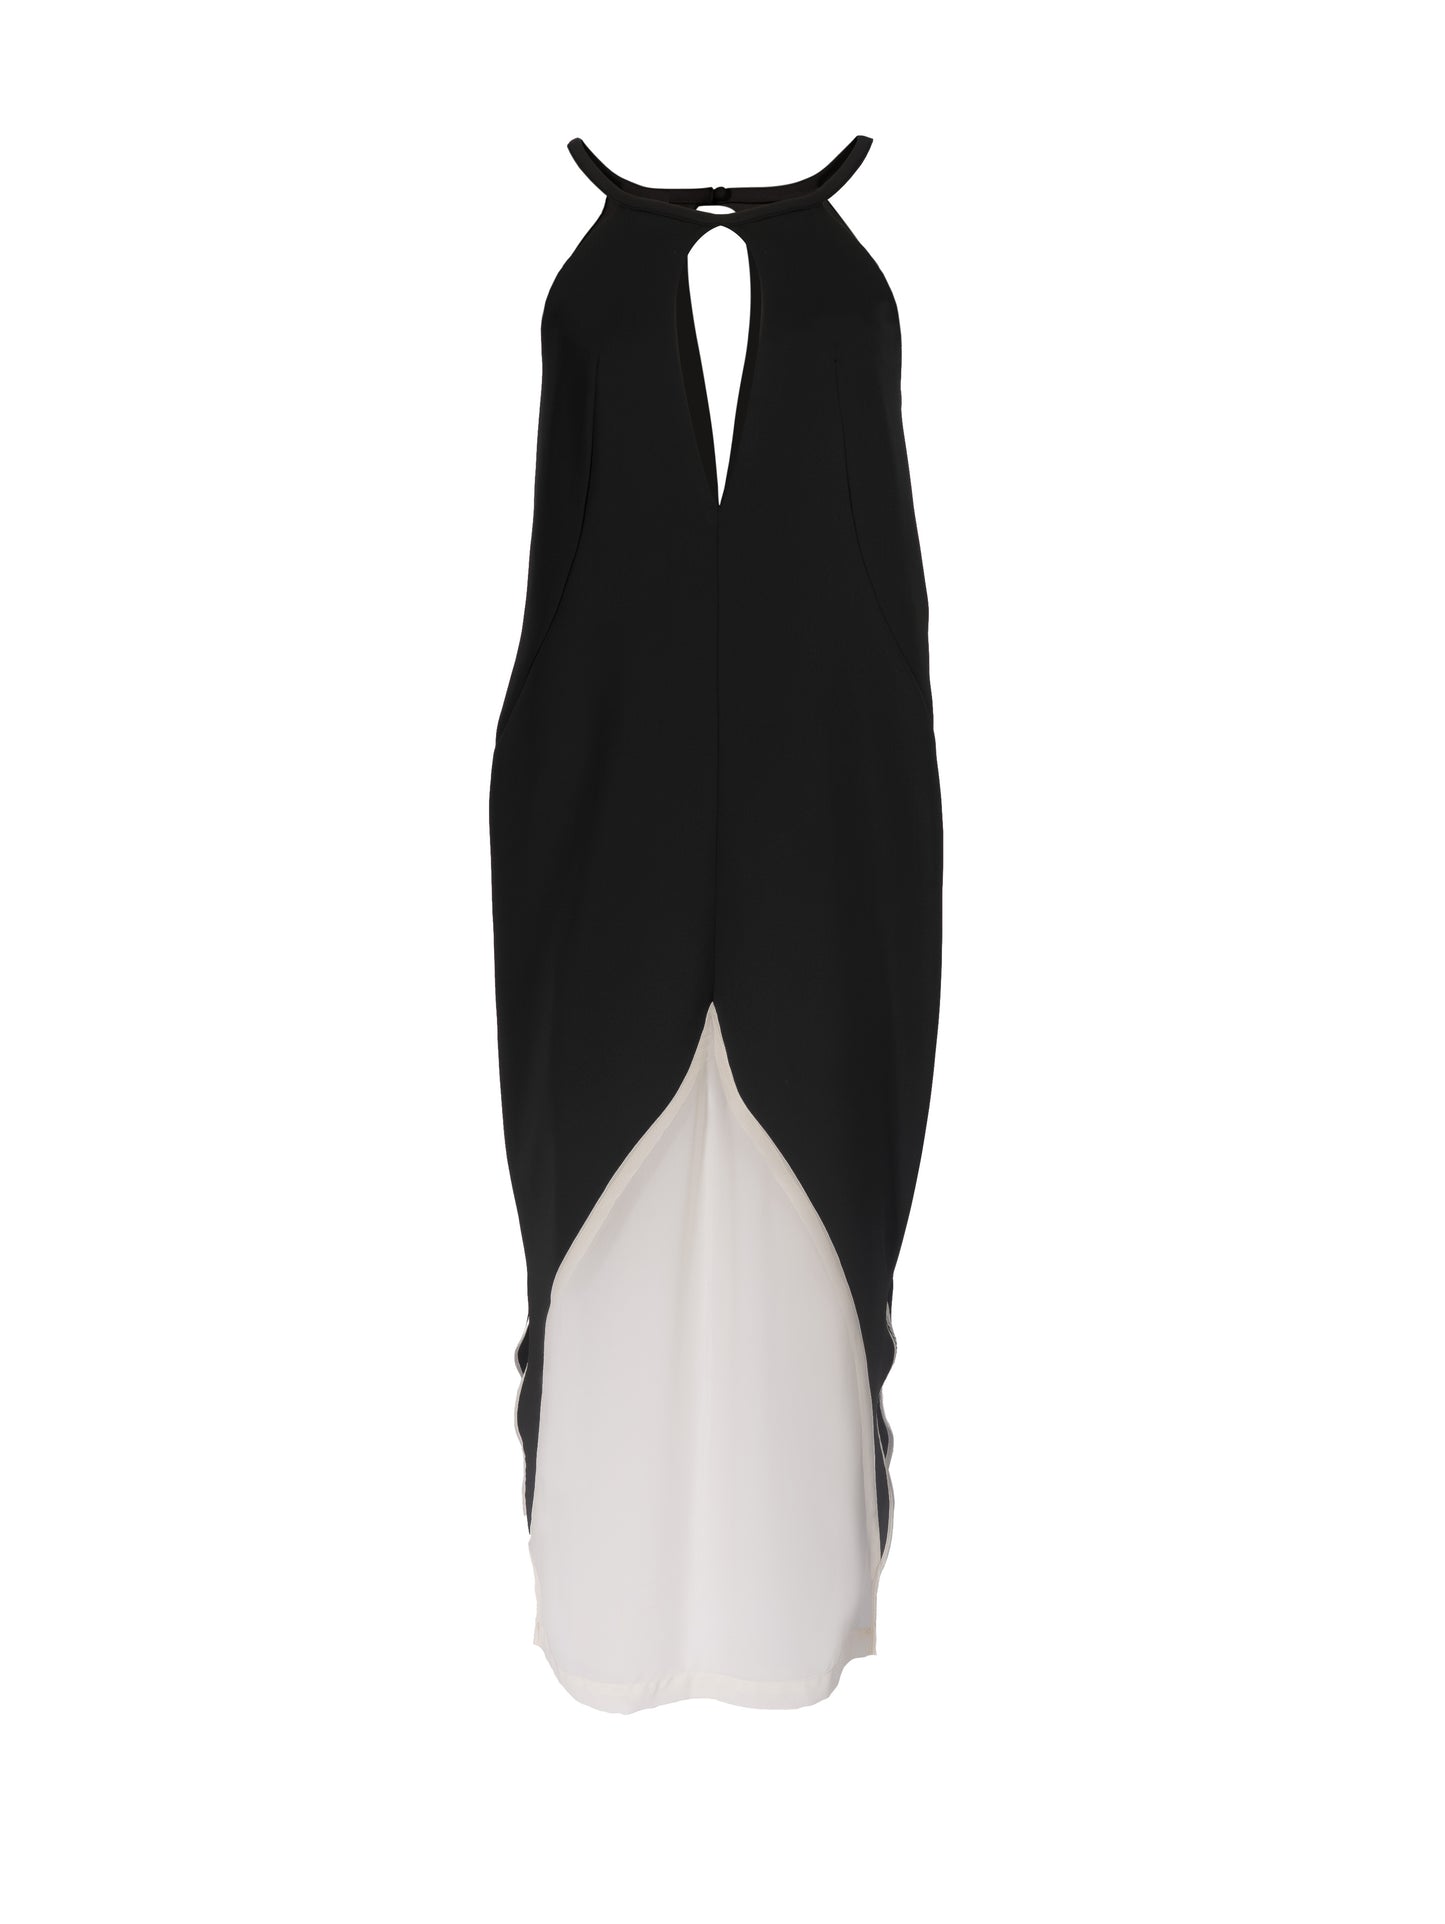 ABI, black and white drop dress